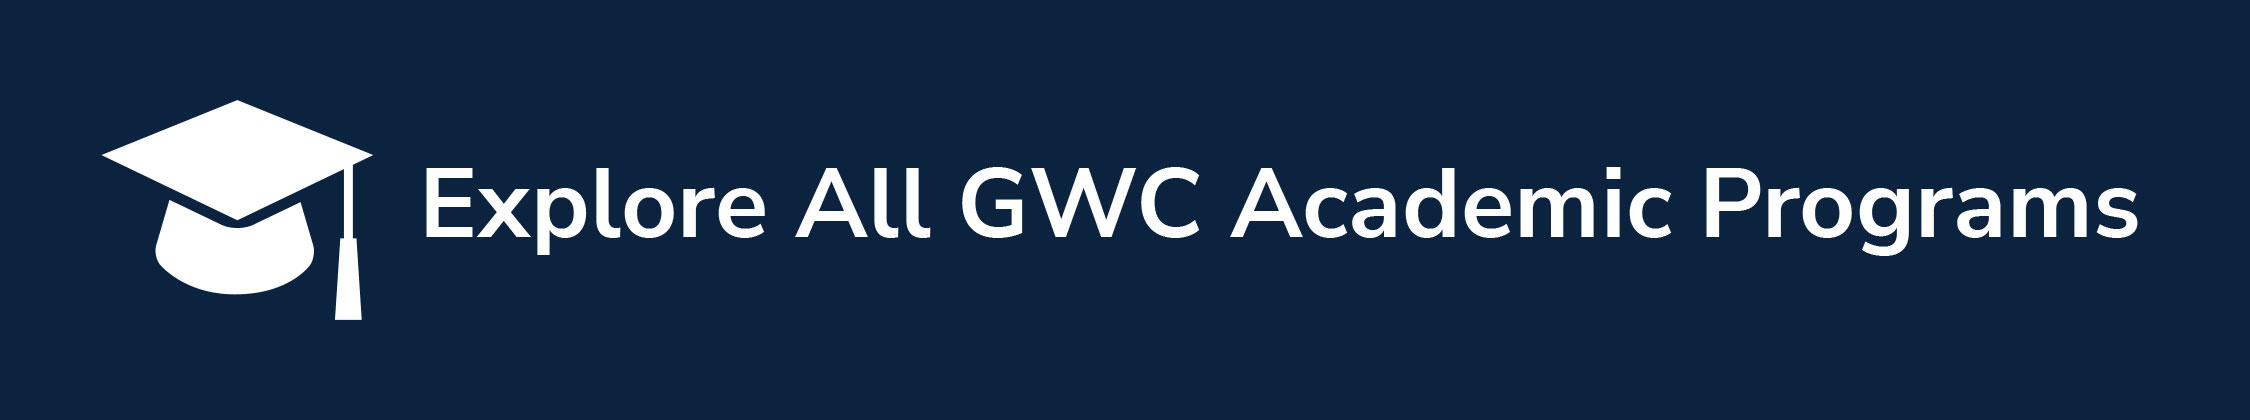 Explore All GWC Academic Programs